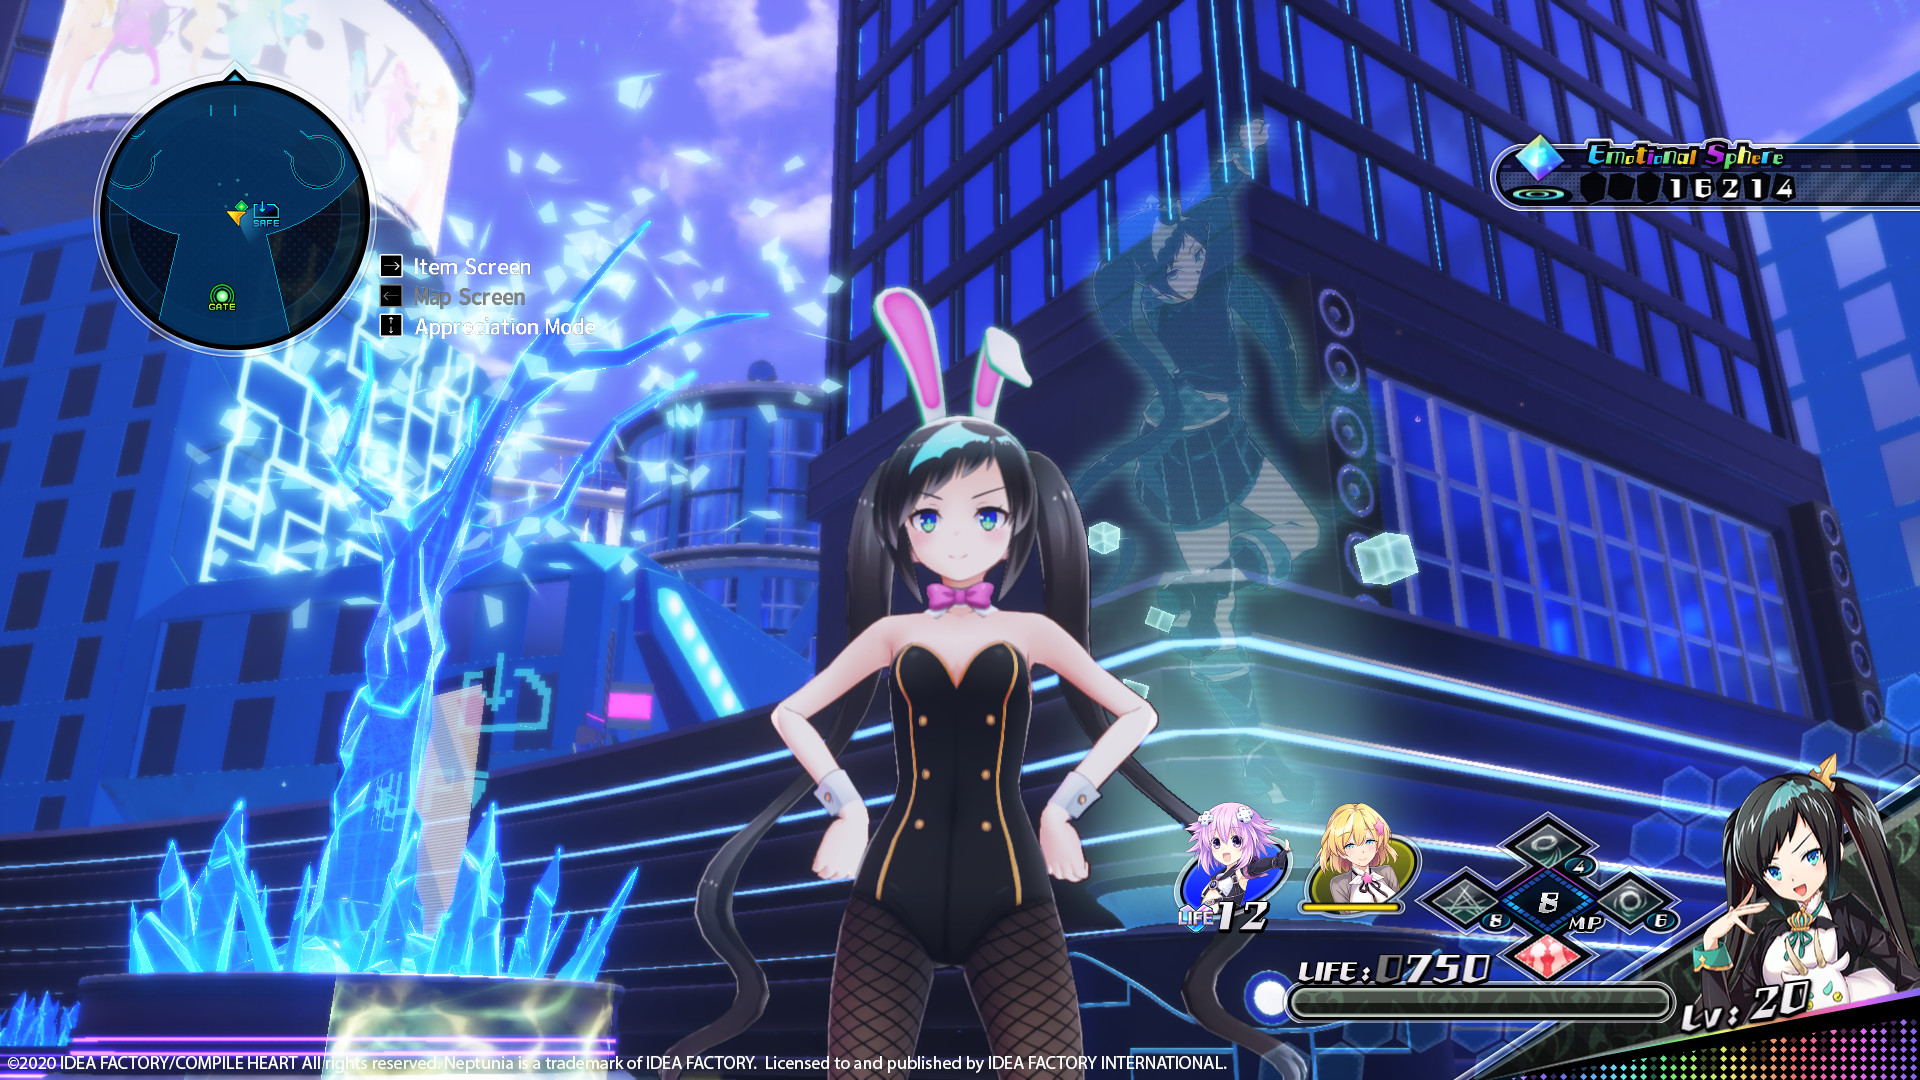 [$ 2.24] Neptunia Virtual Stars - Bunny Outfit: V-Idol Set DLC Steam CD Key